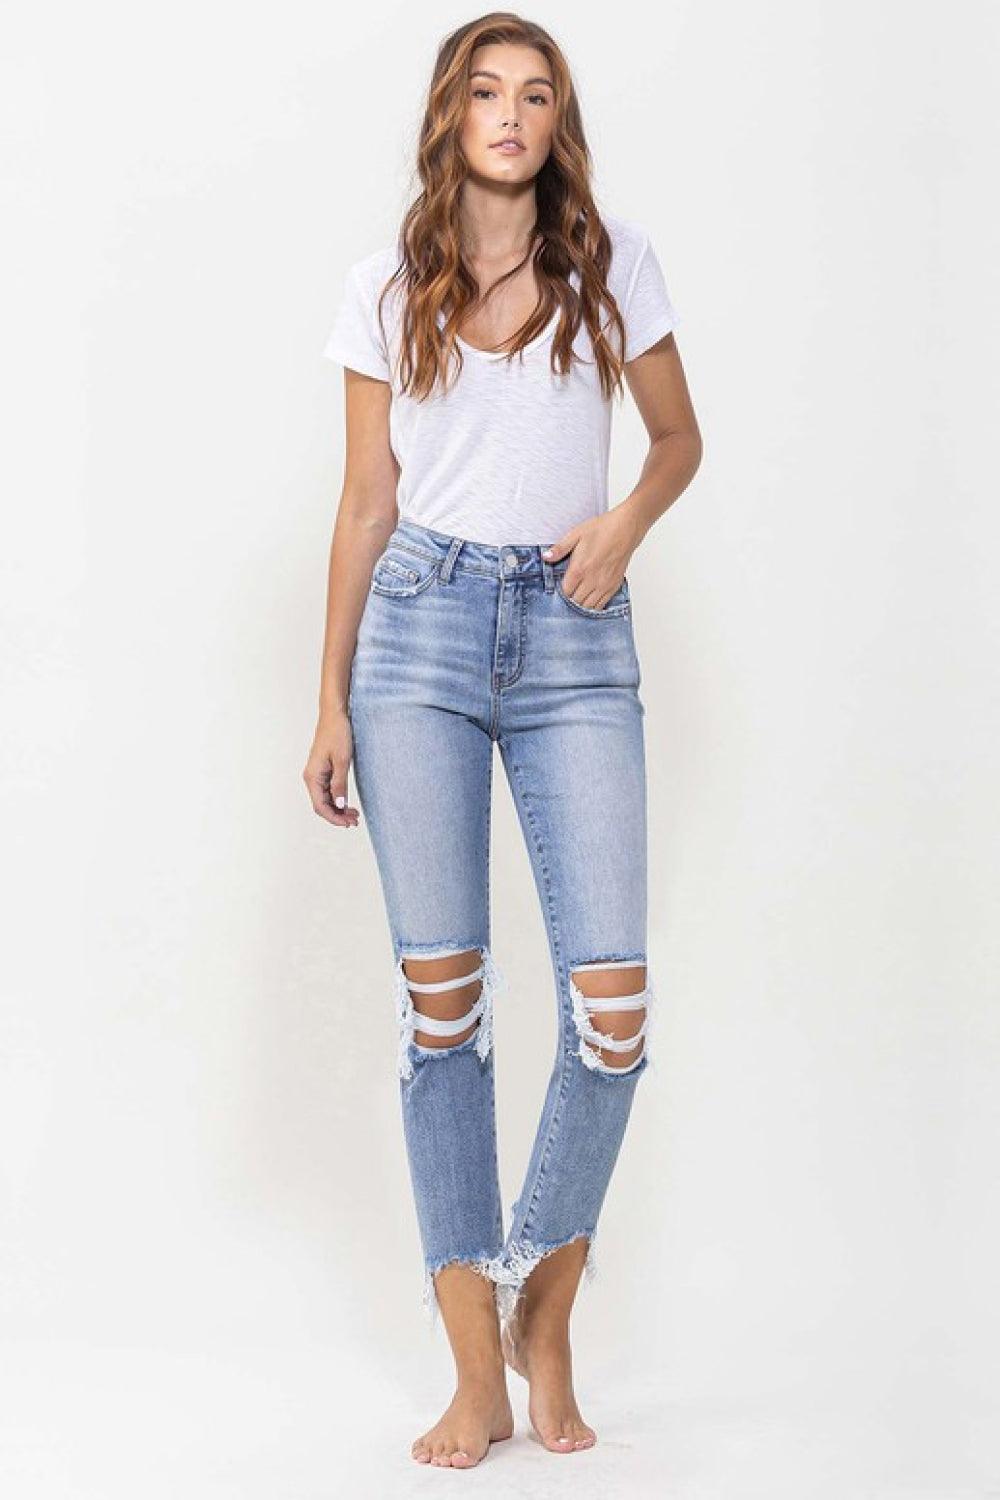 Bona Fide Fashion - Full Size Courtney Super High Rise Kick Flare Jeans - Women Fashion - Bona Fide Fashion